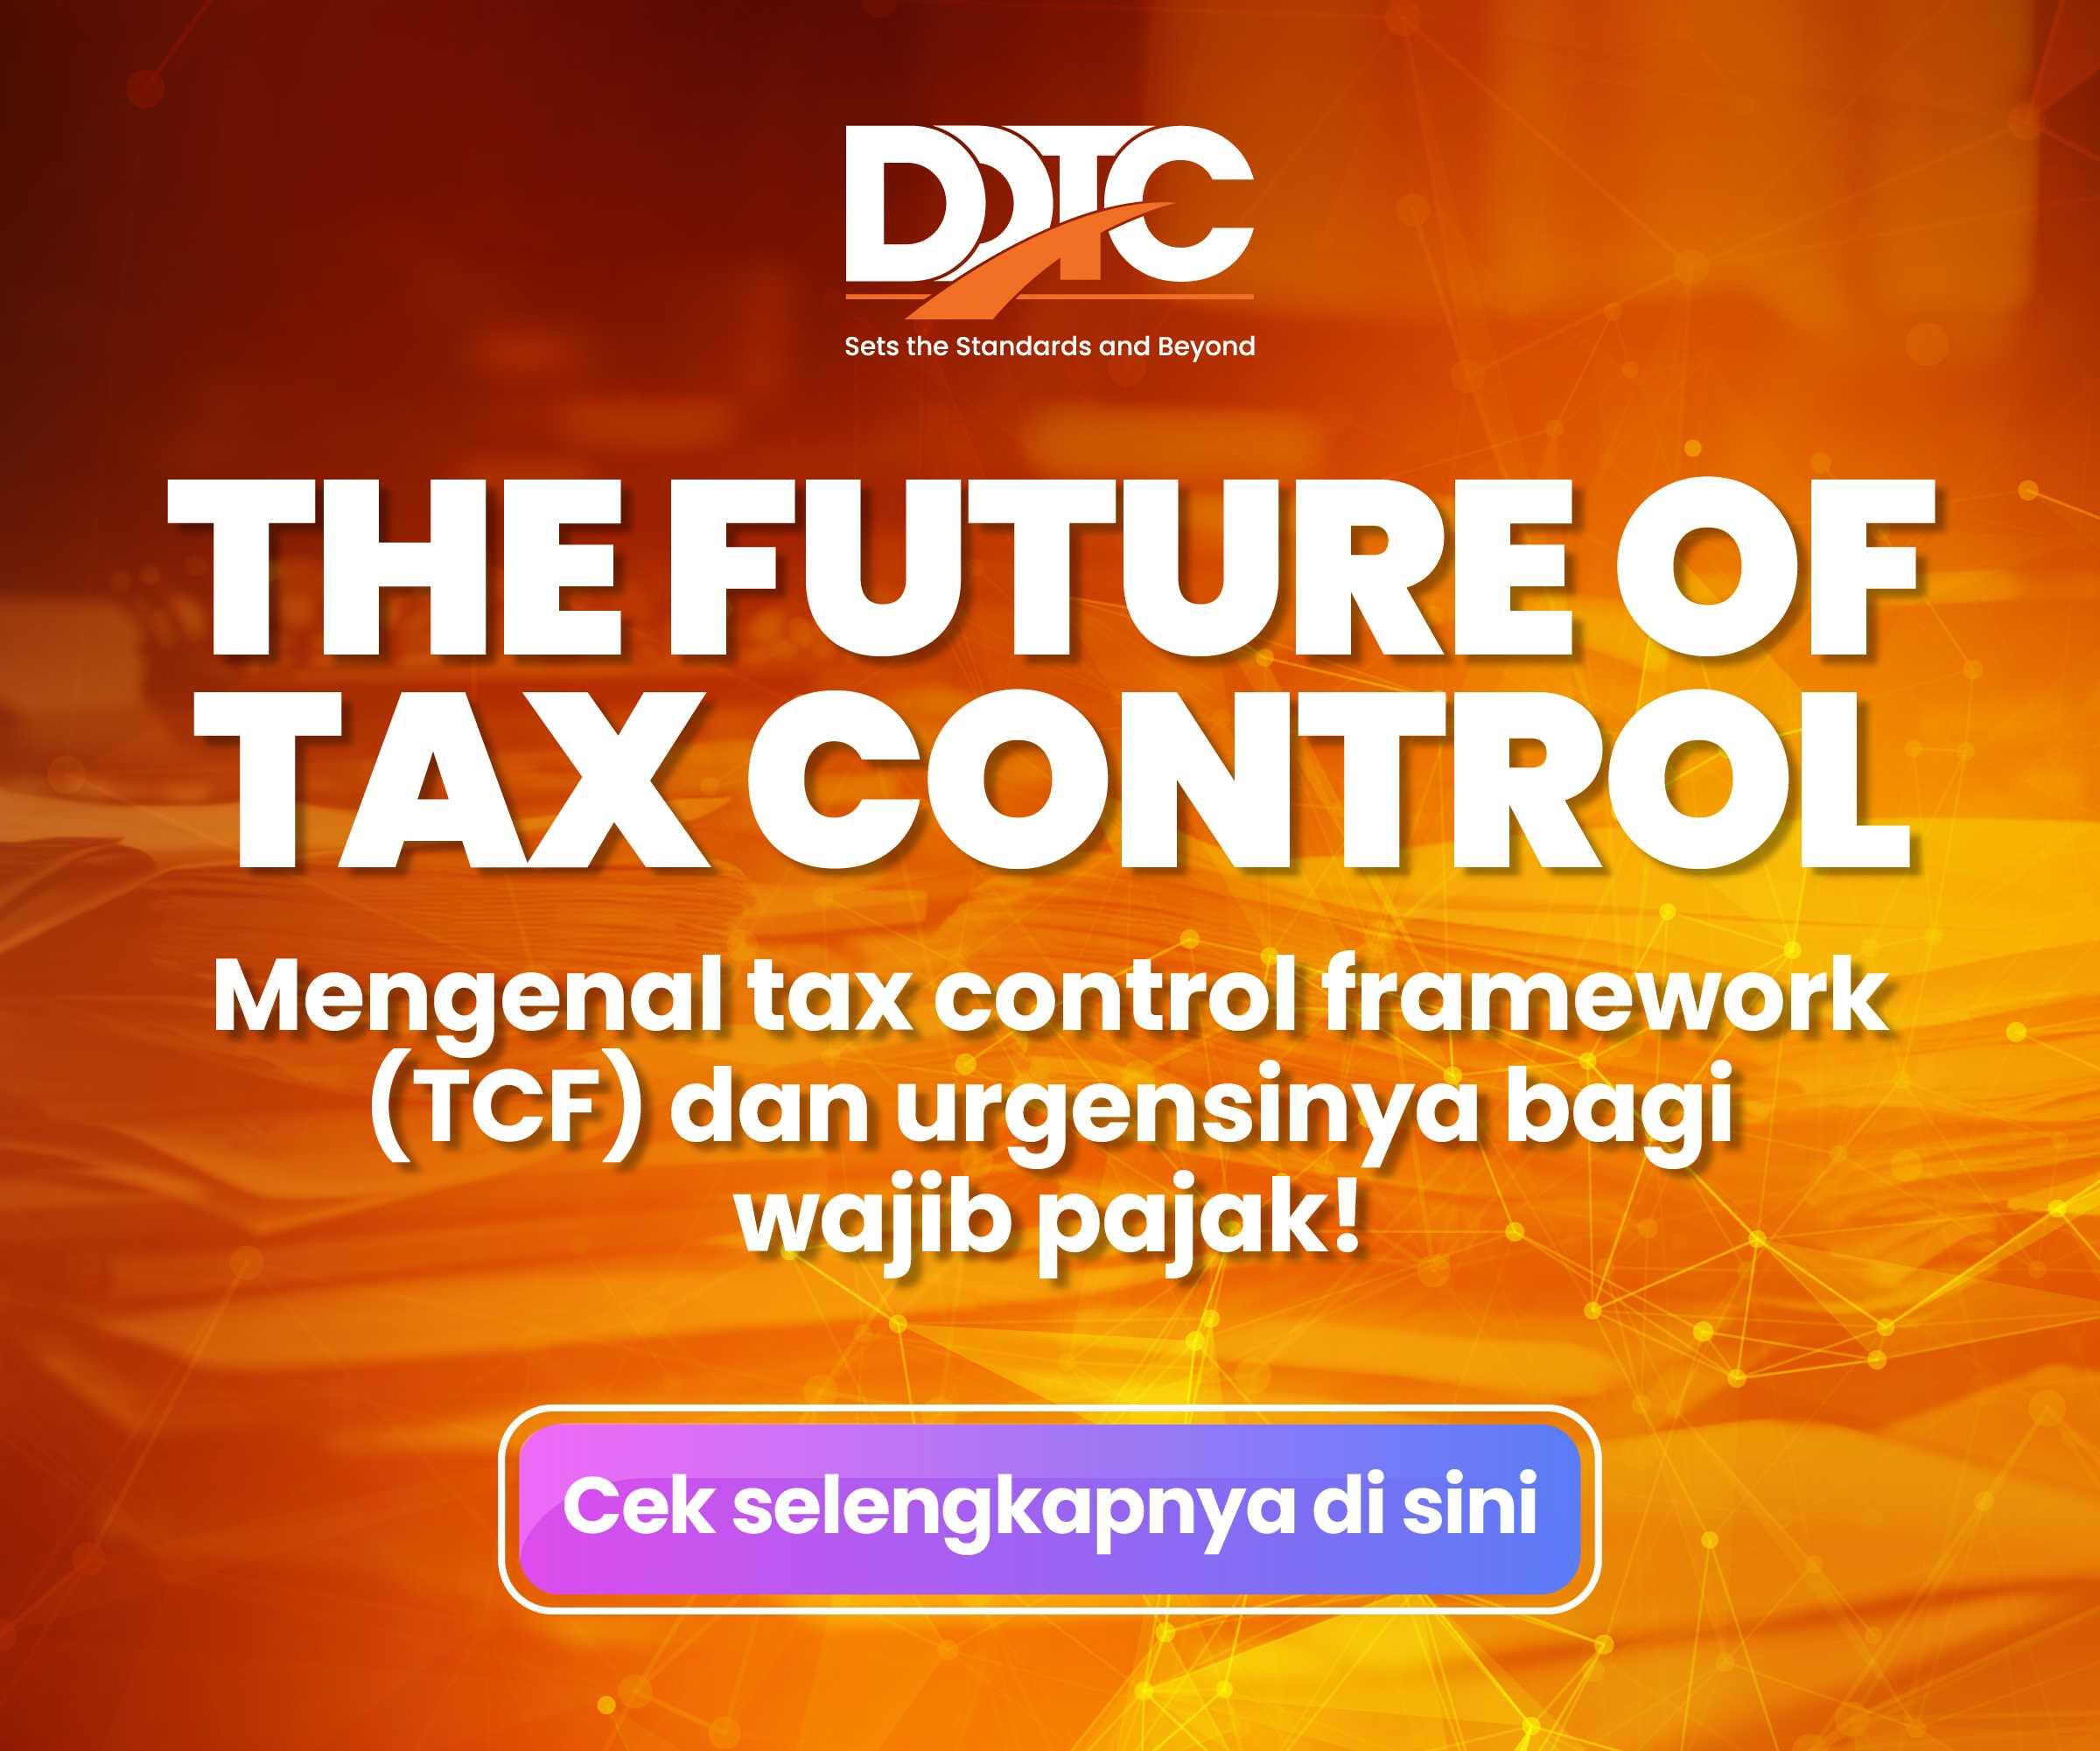 DDTCNews - TCF Promo - Rectangle - Desktop